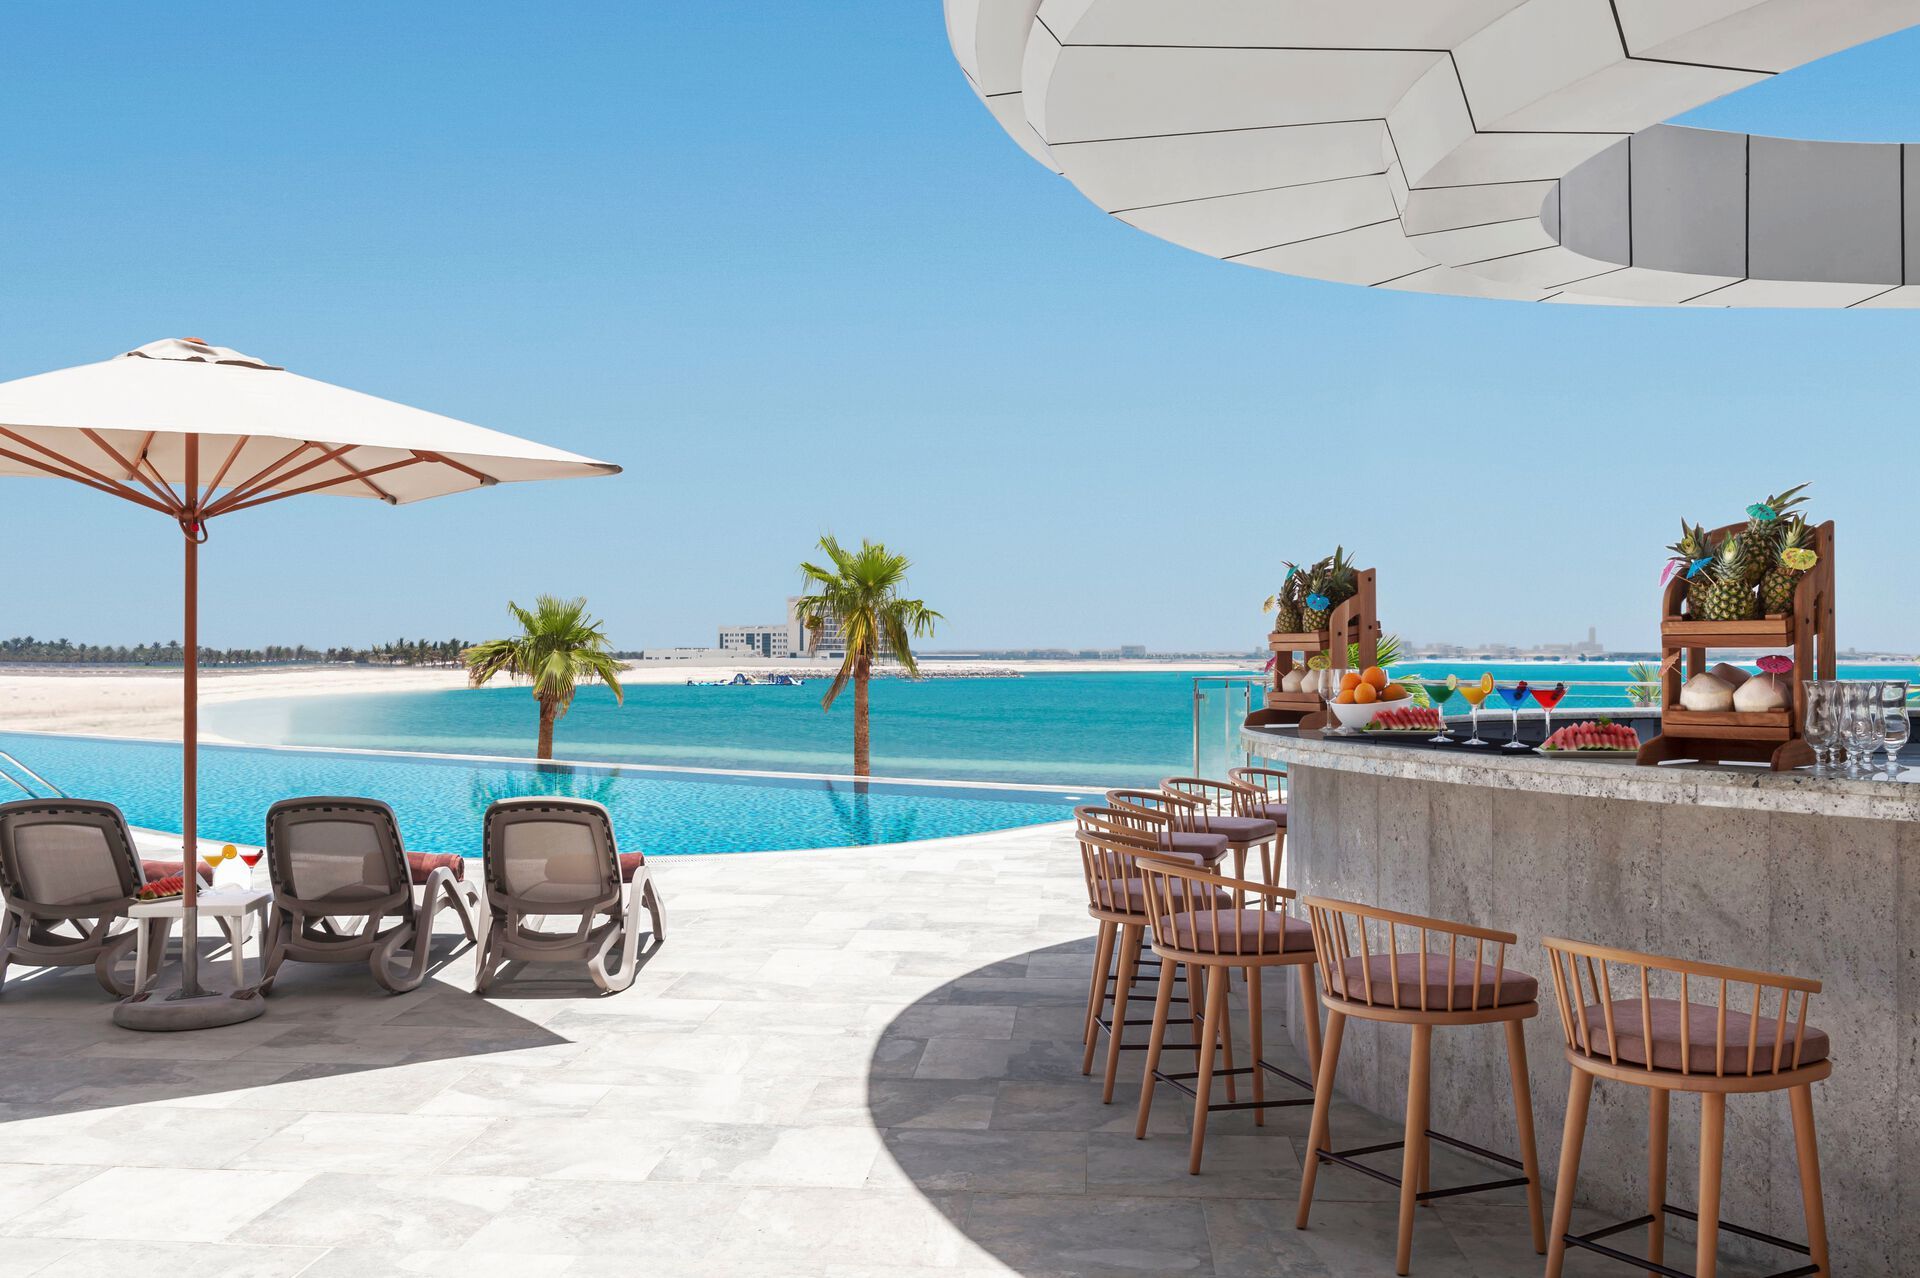 Emirats Arabes Unis - Ile de Marjan - Ras Al Khaimah - Hôtel Hampton by Hilton Marjan Island 4*